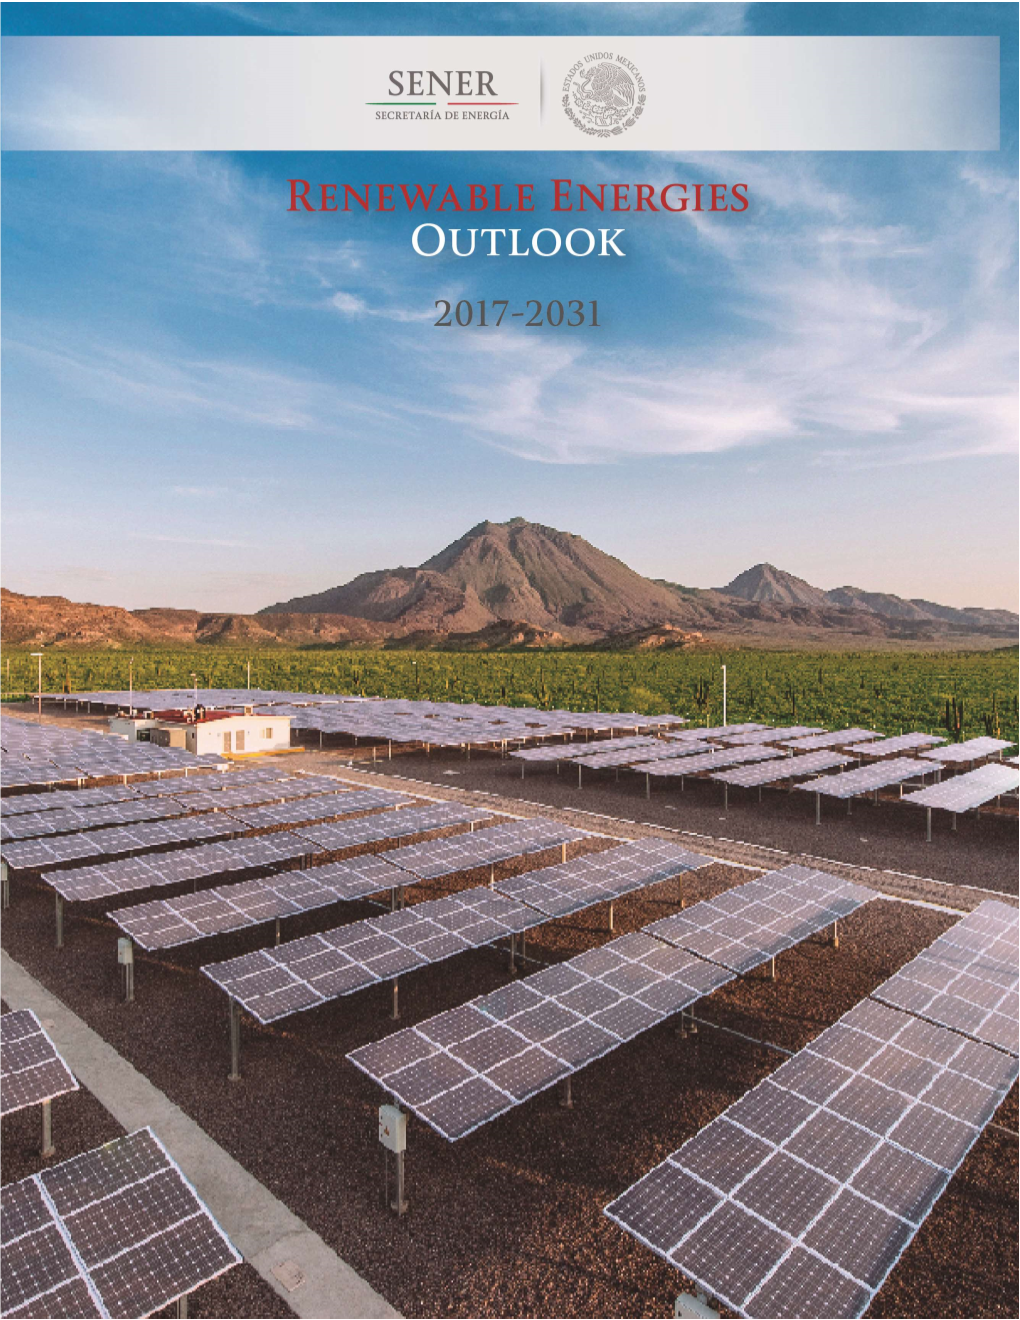 Renewable Energies Outlook 2017-2031